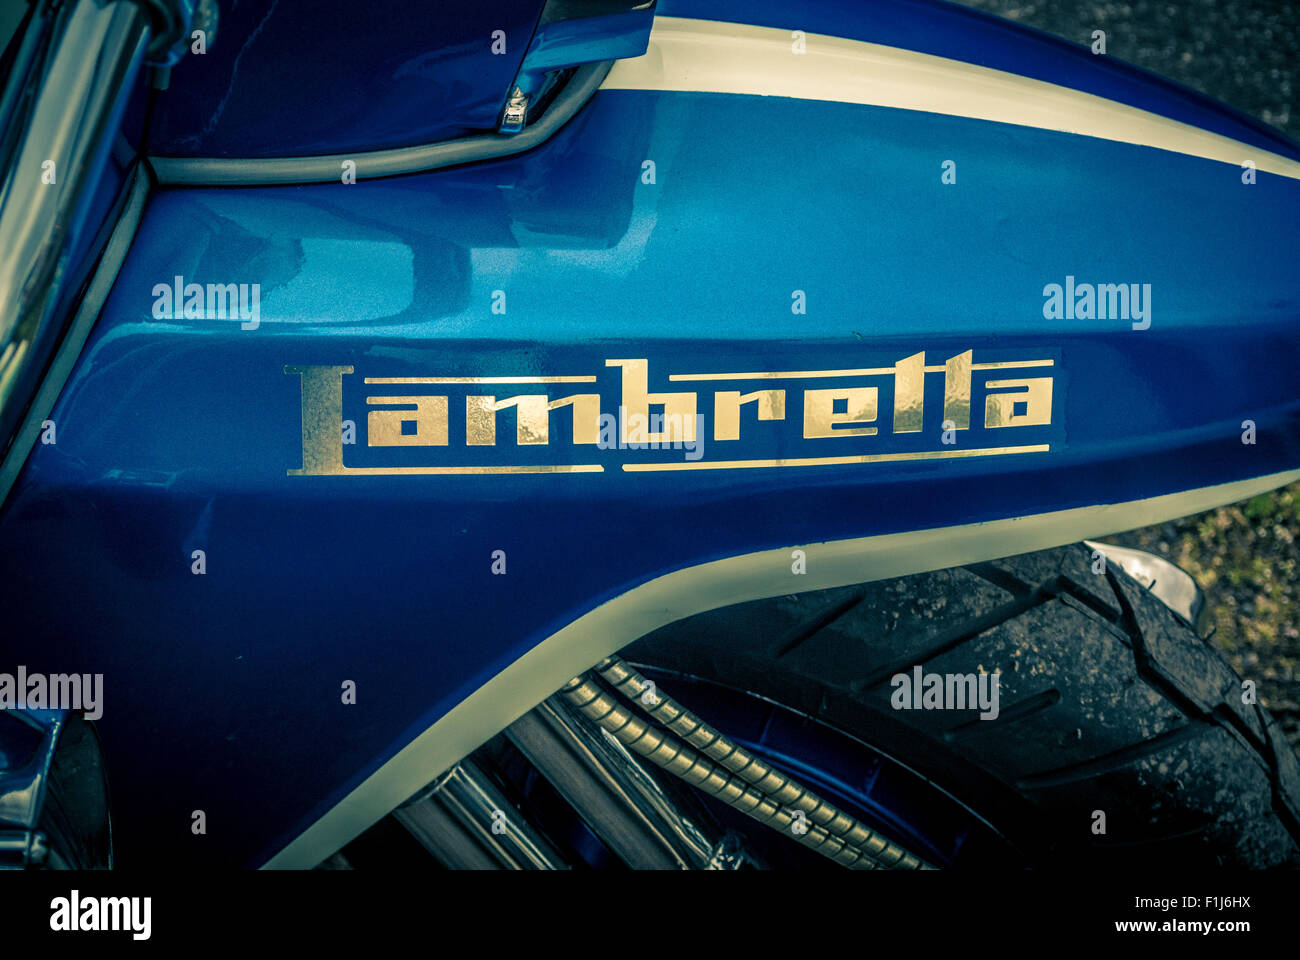 Close up of Lambretta motorcycle Stock Photo